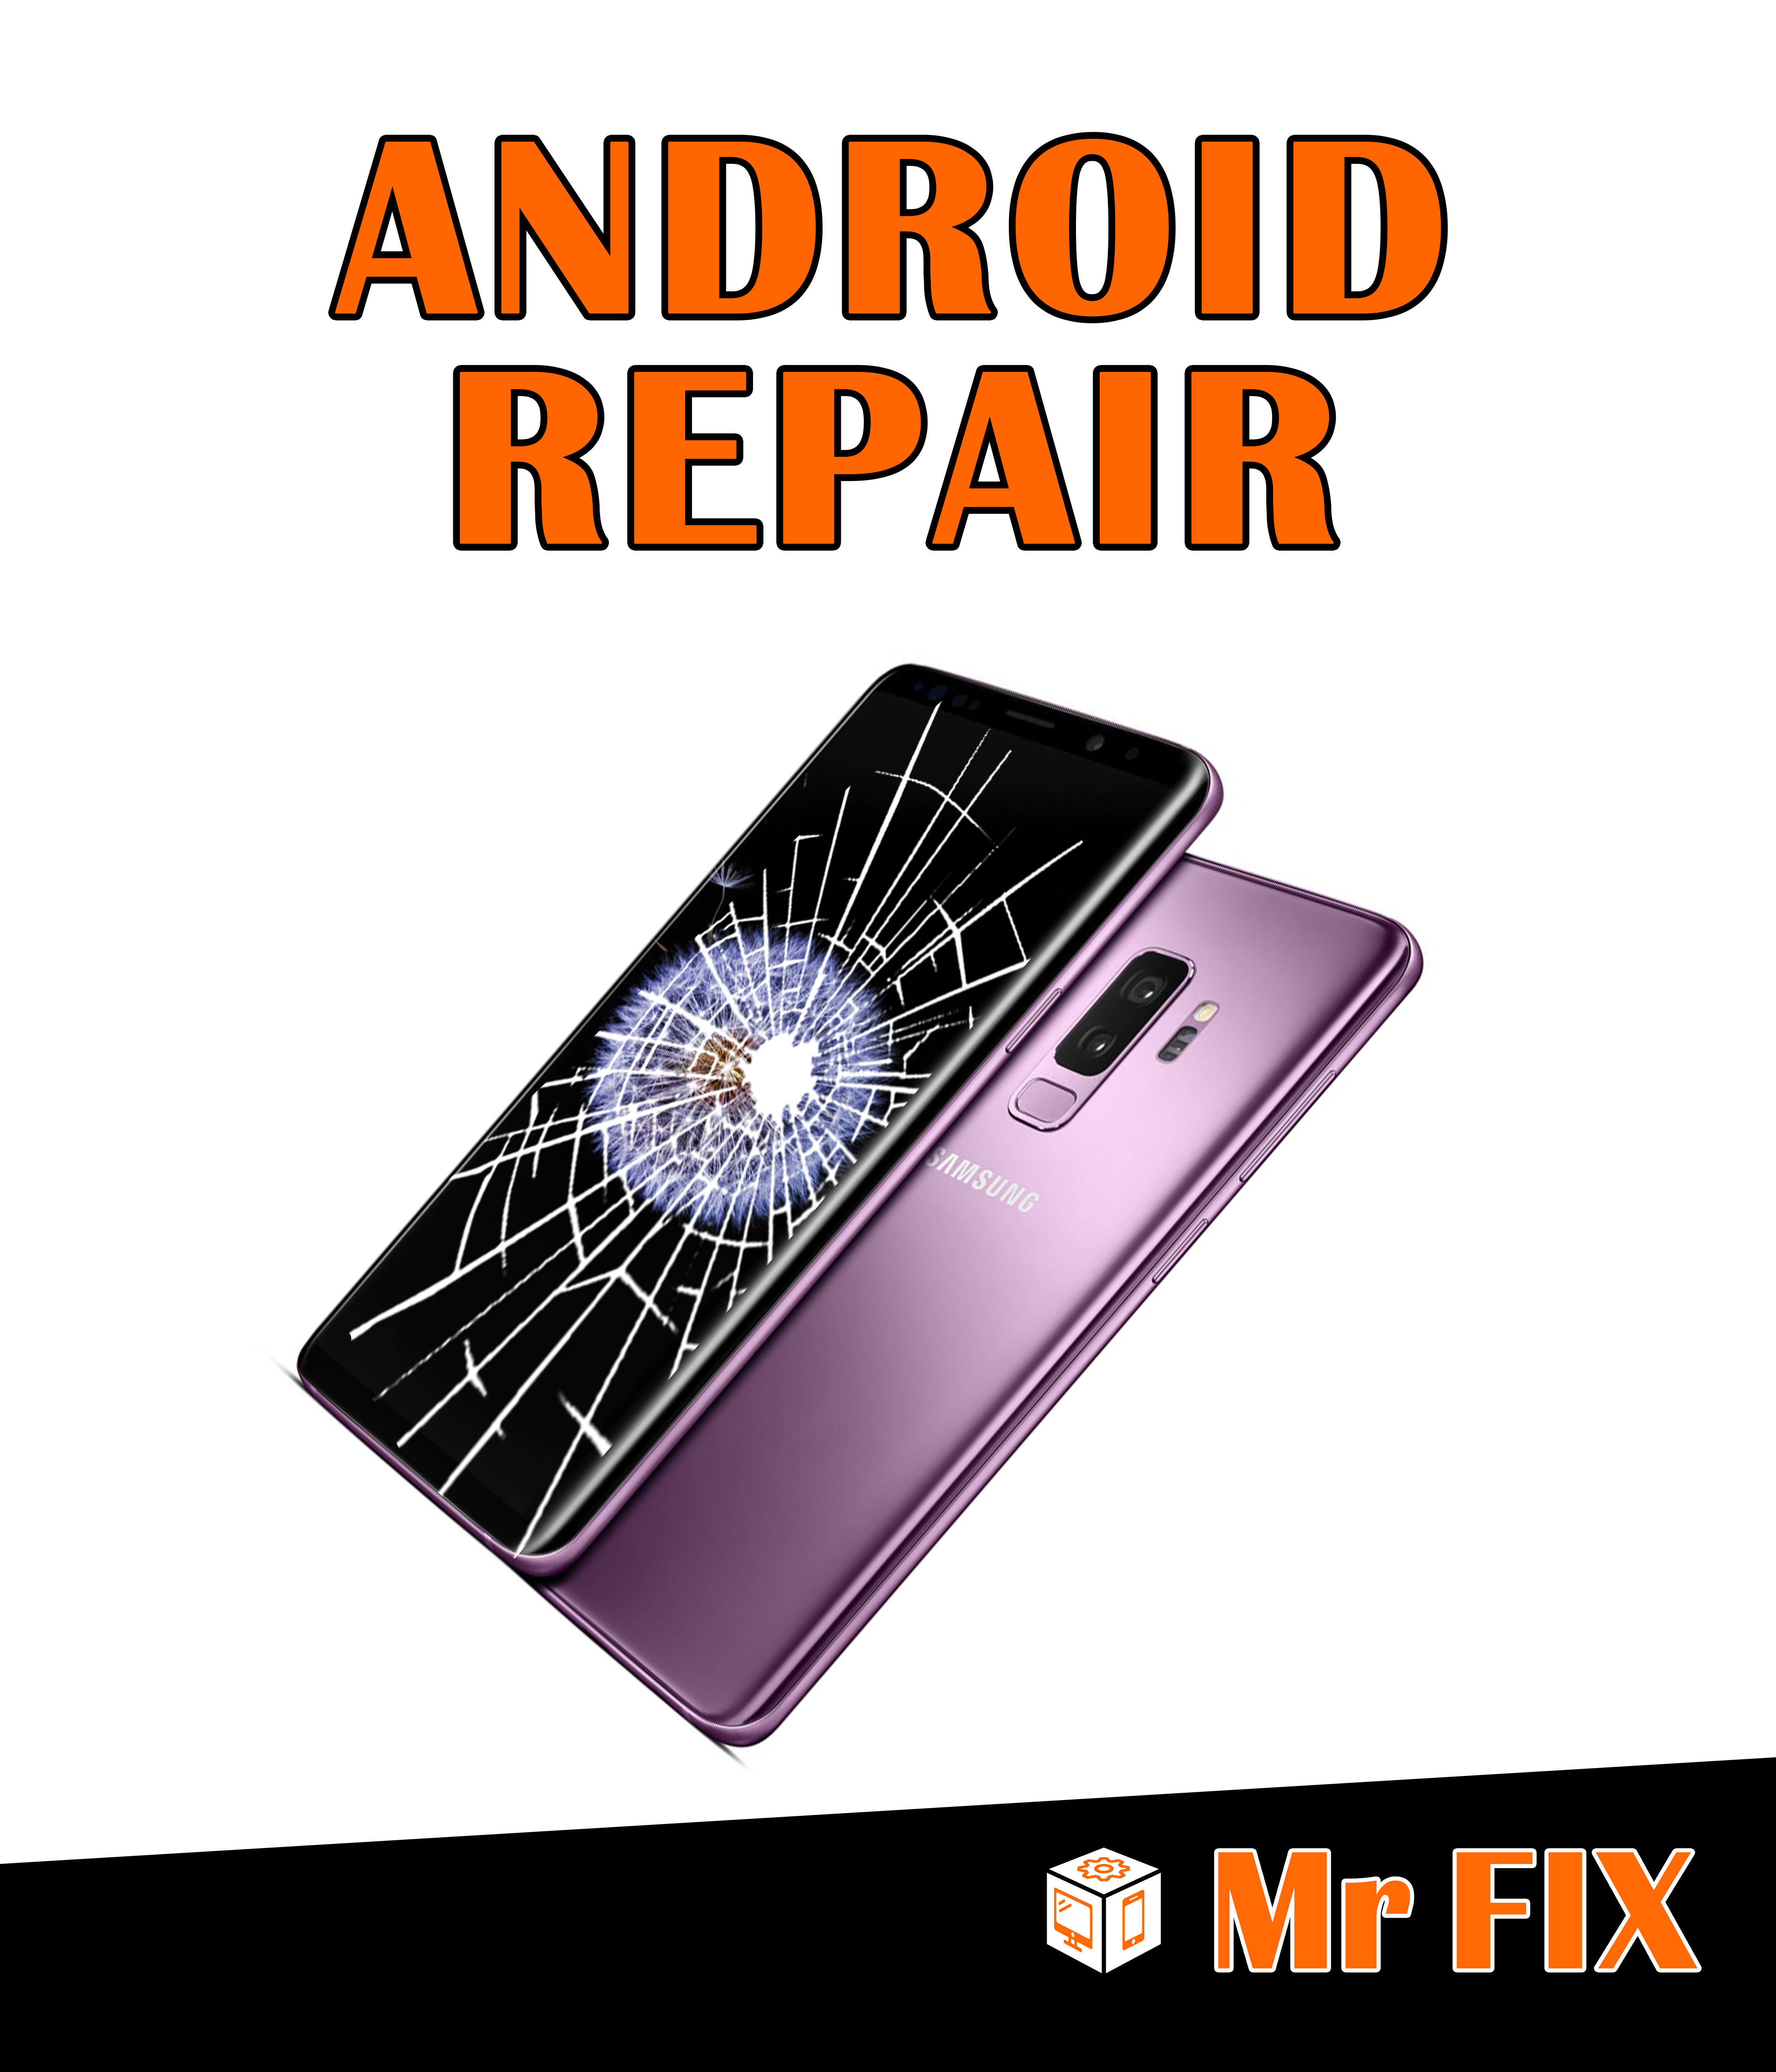 Mr Fix Cell Phone & Computer Repair Photo